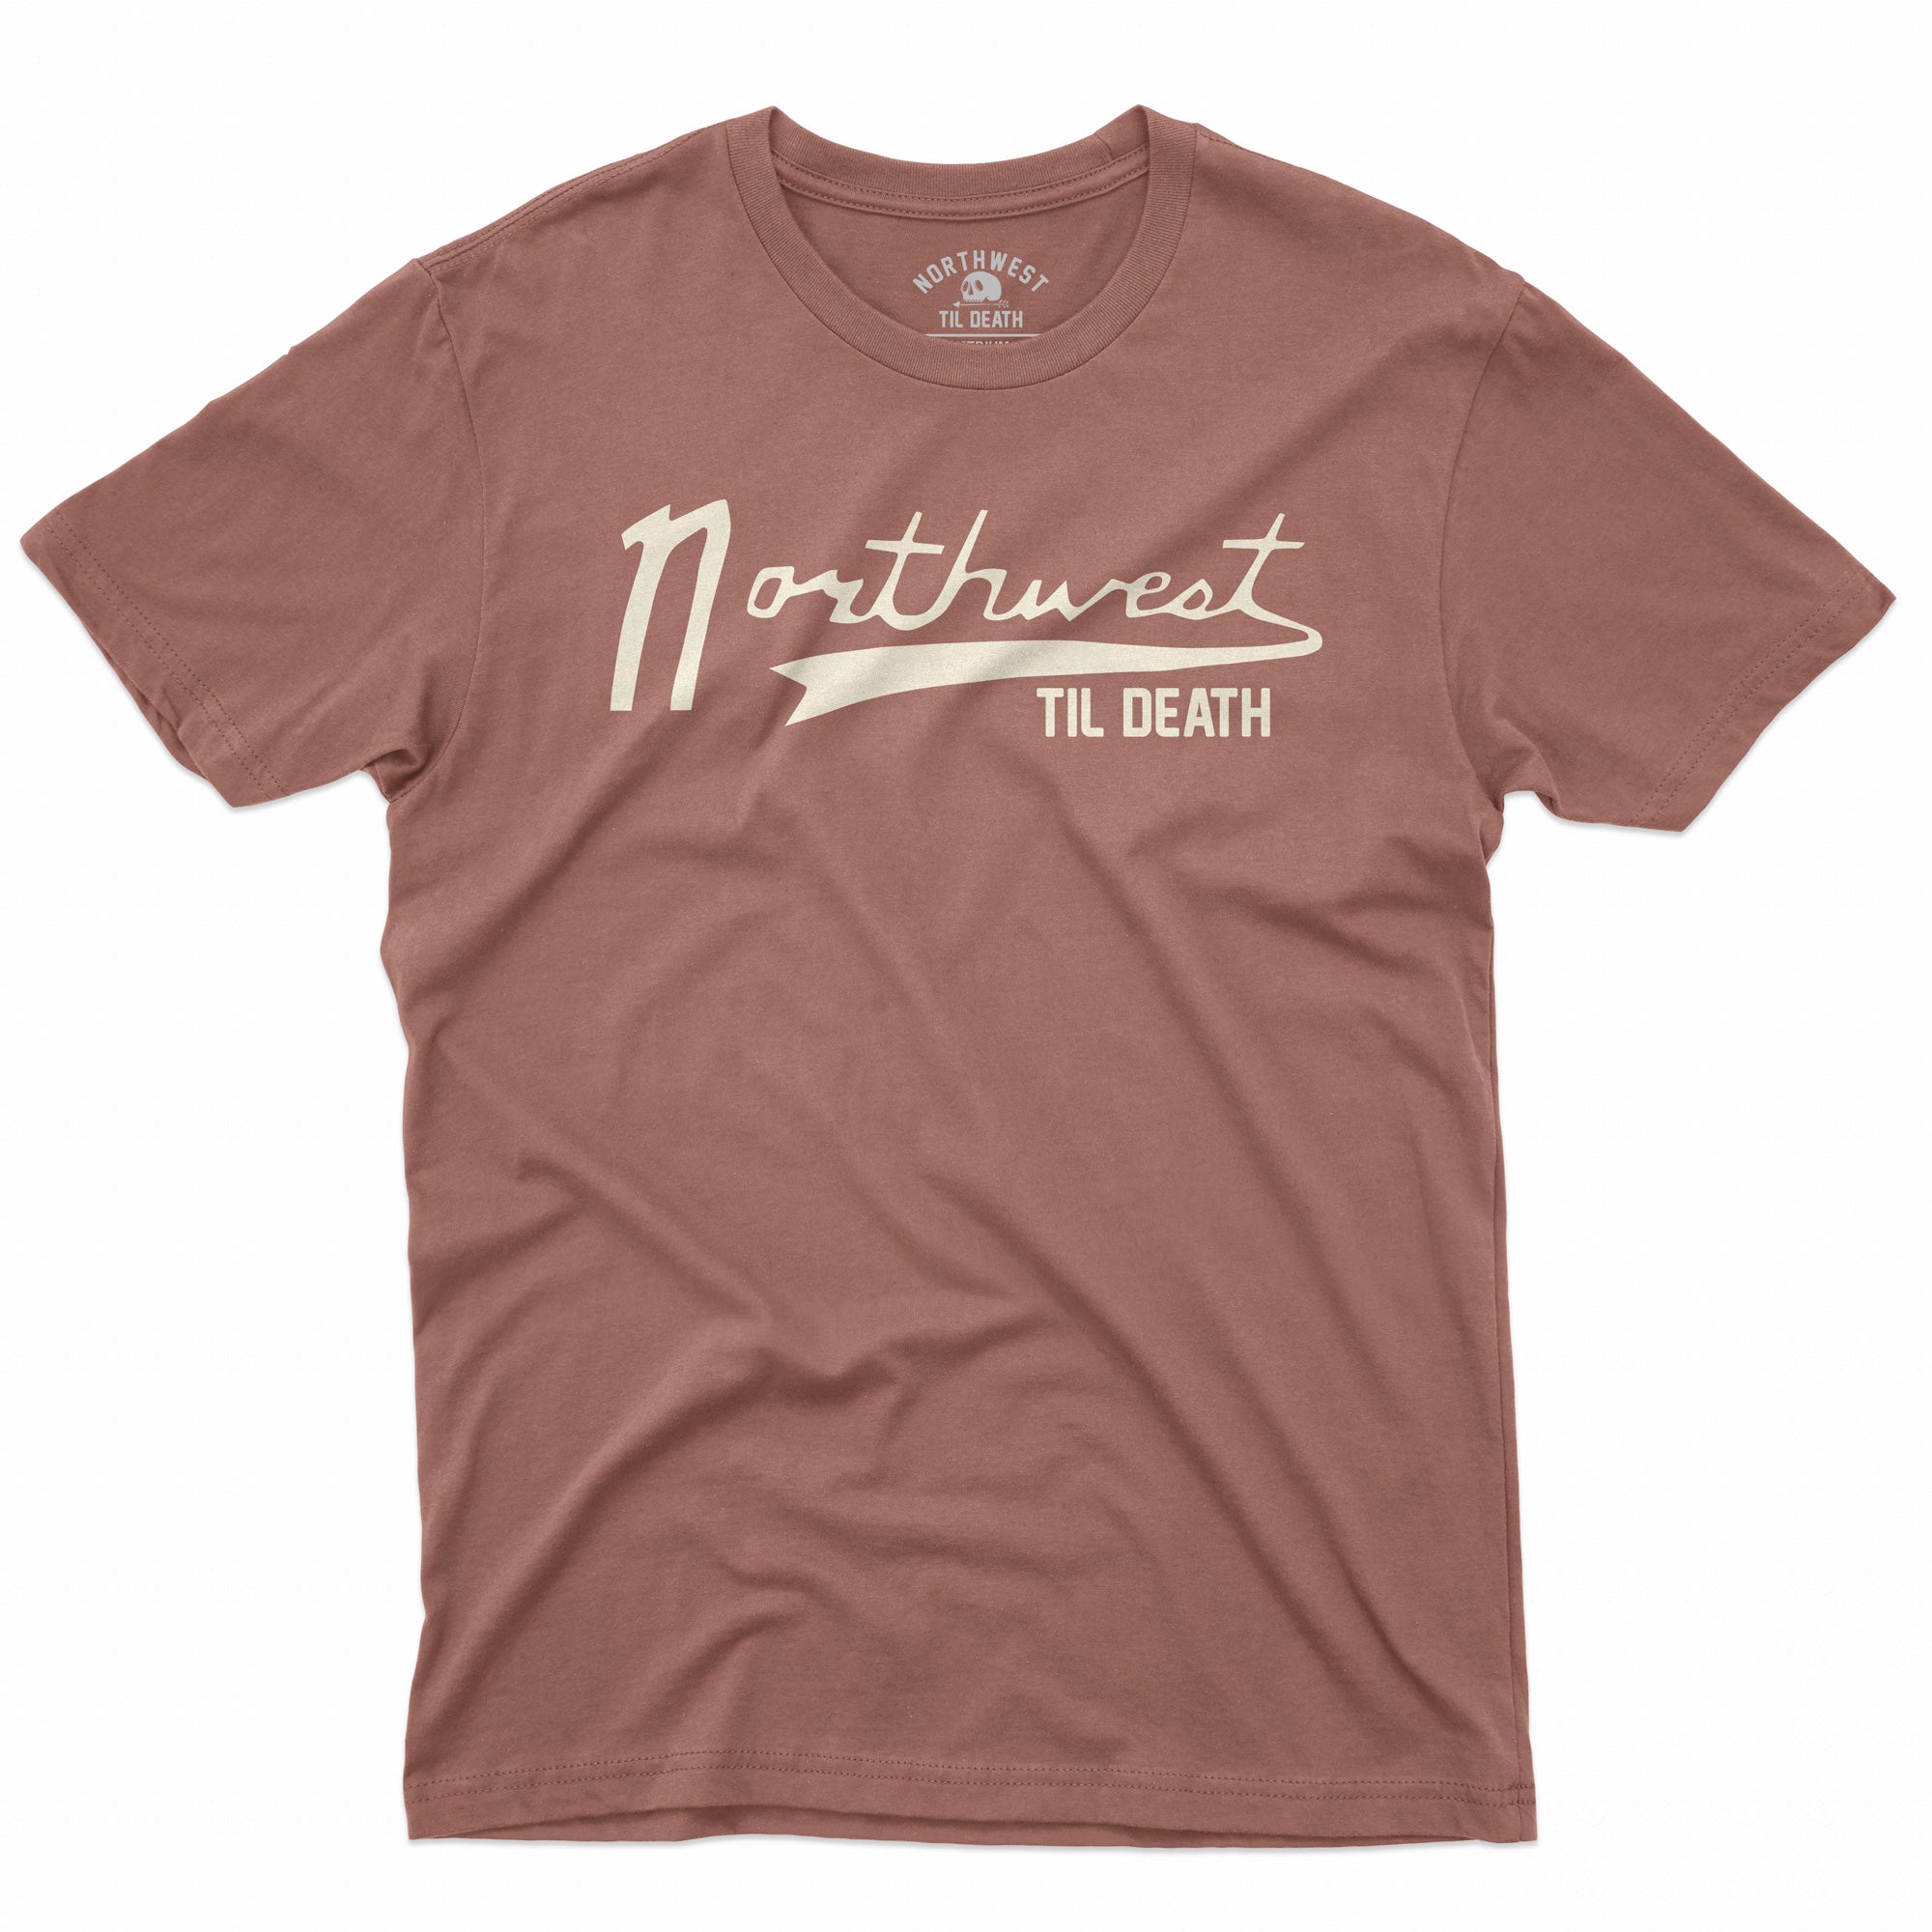 Alternative - Burnout Big League Baseball T-Shirt - 2640